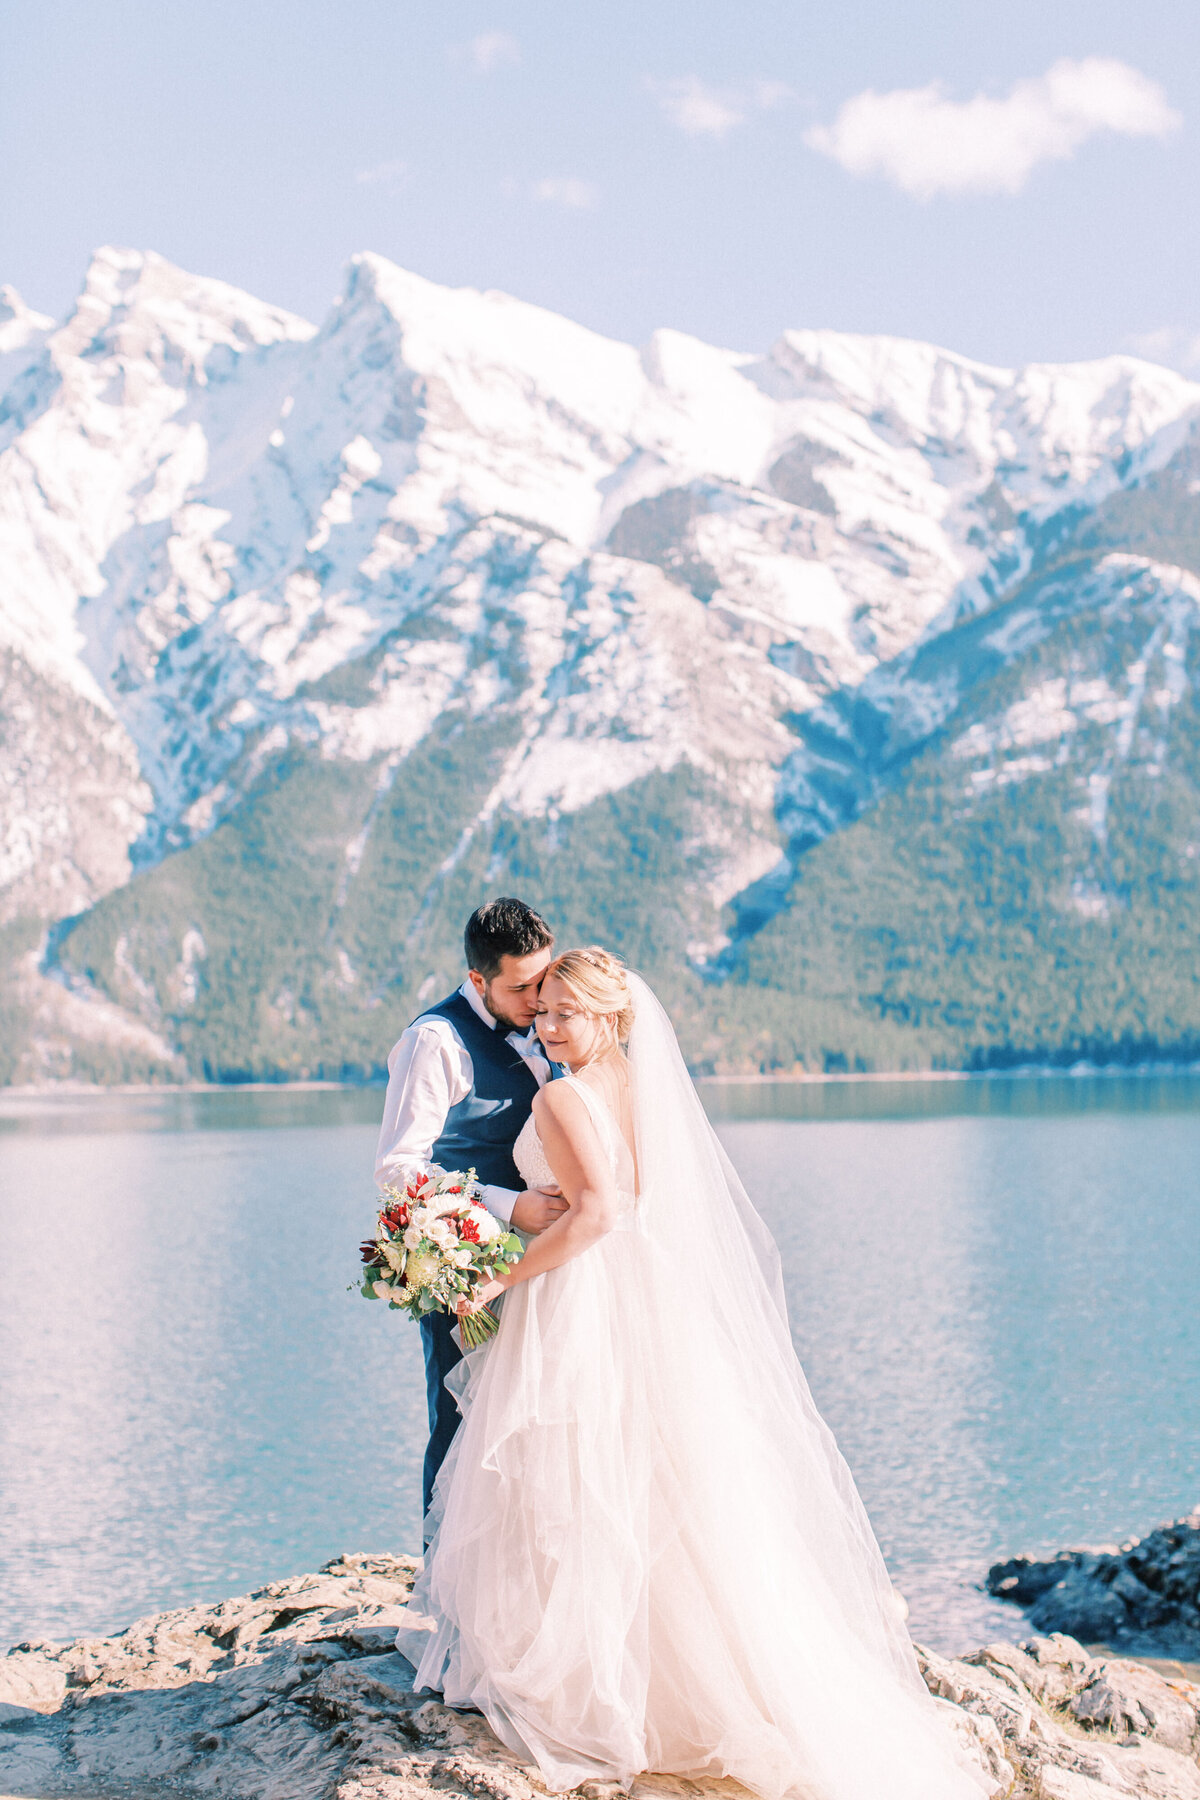 Banff Alberta wedding with mountains